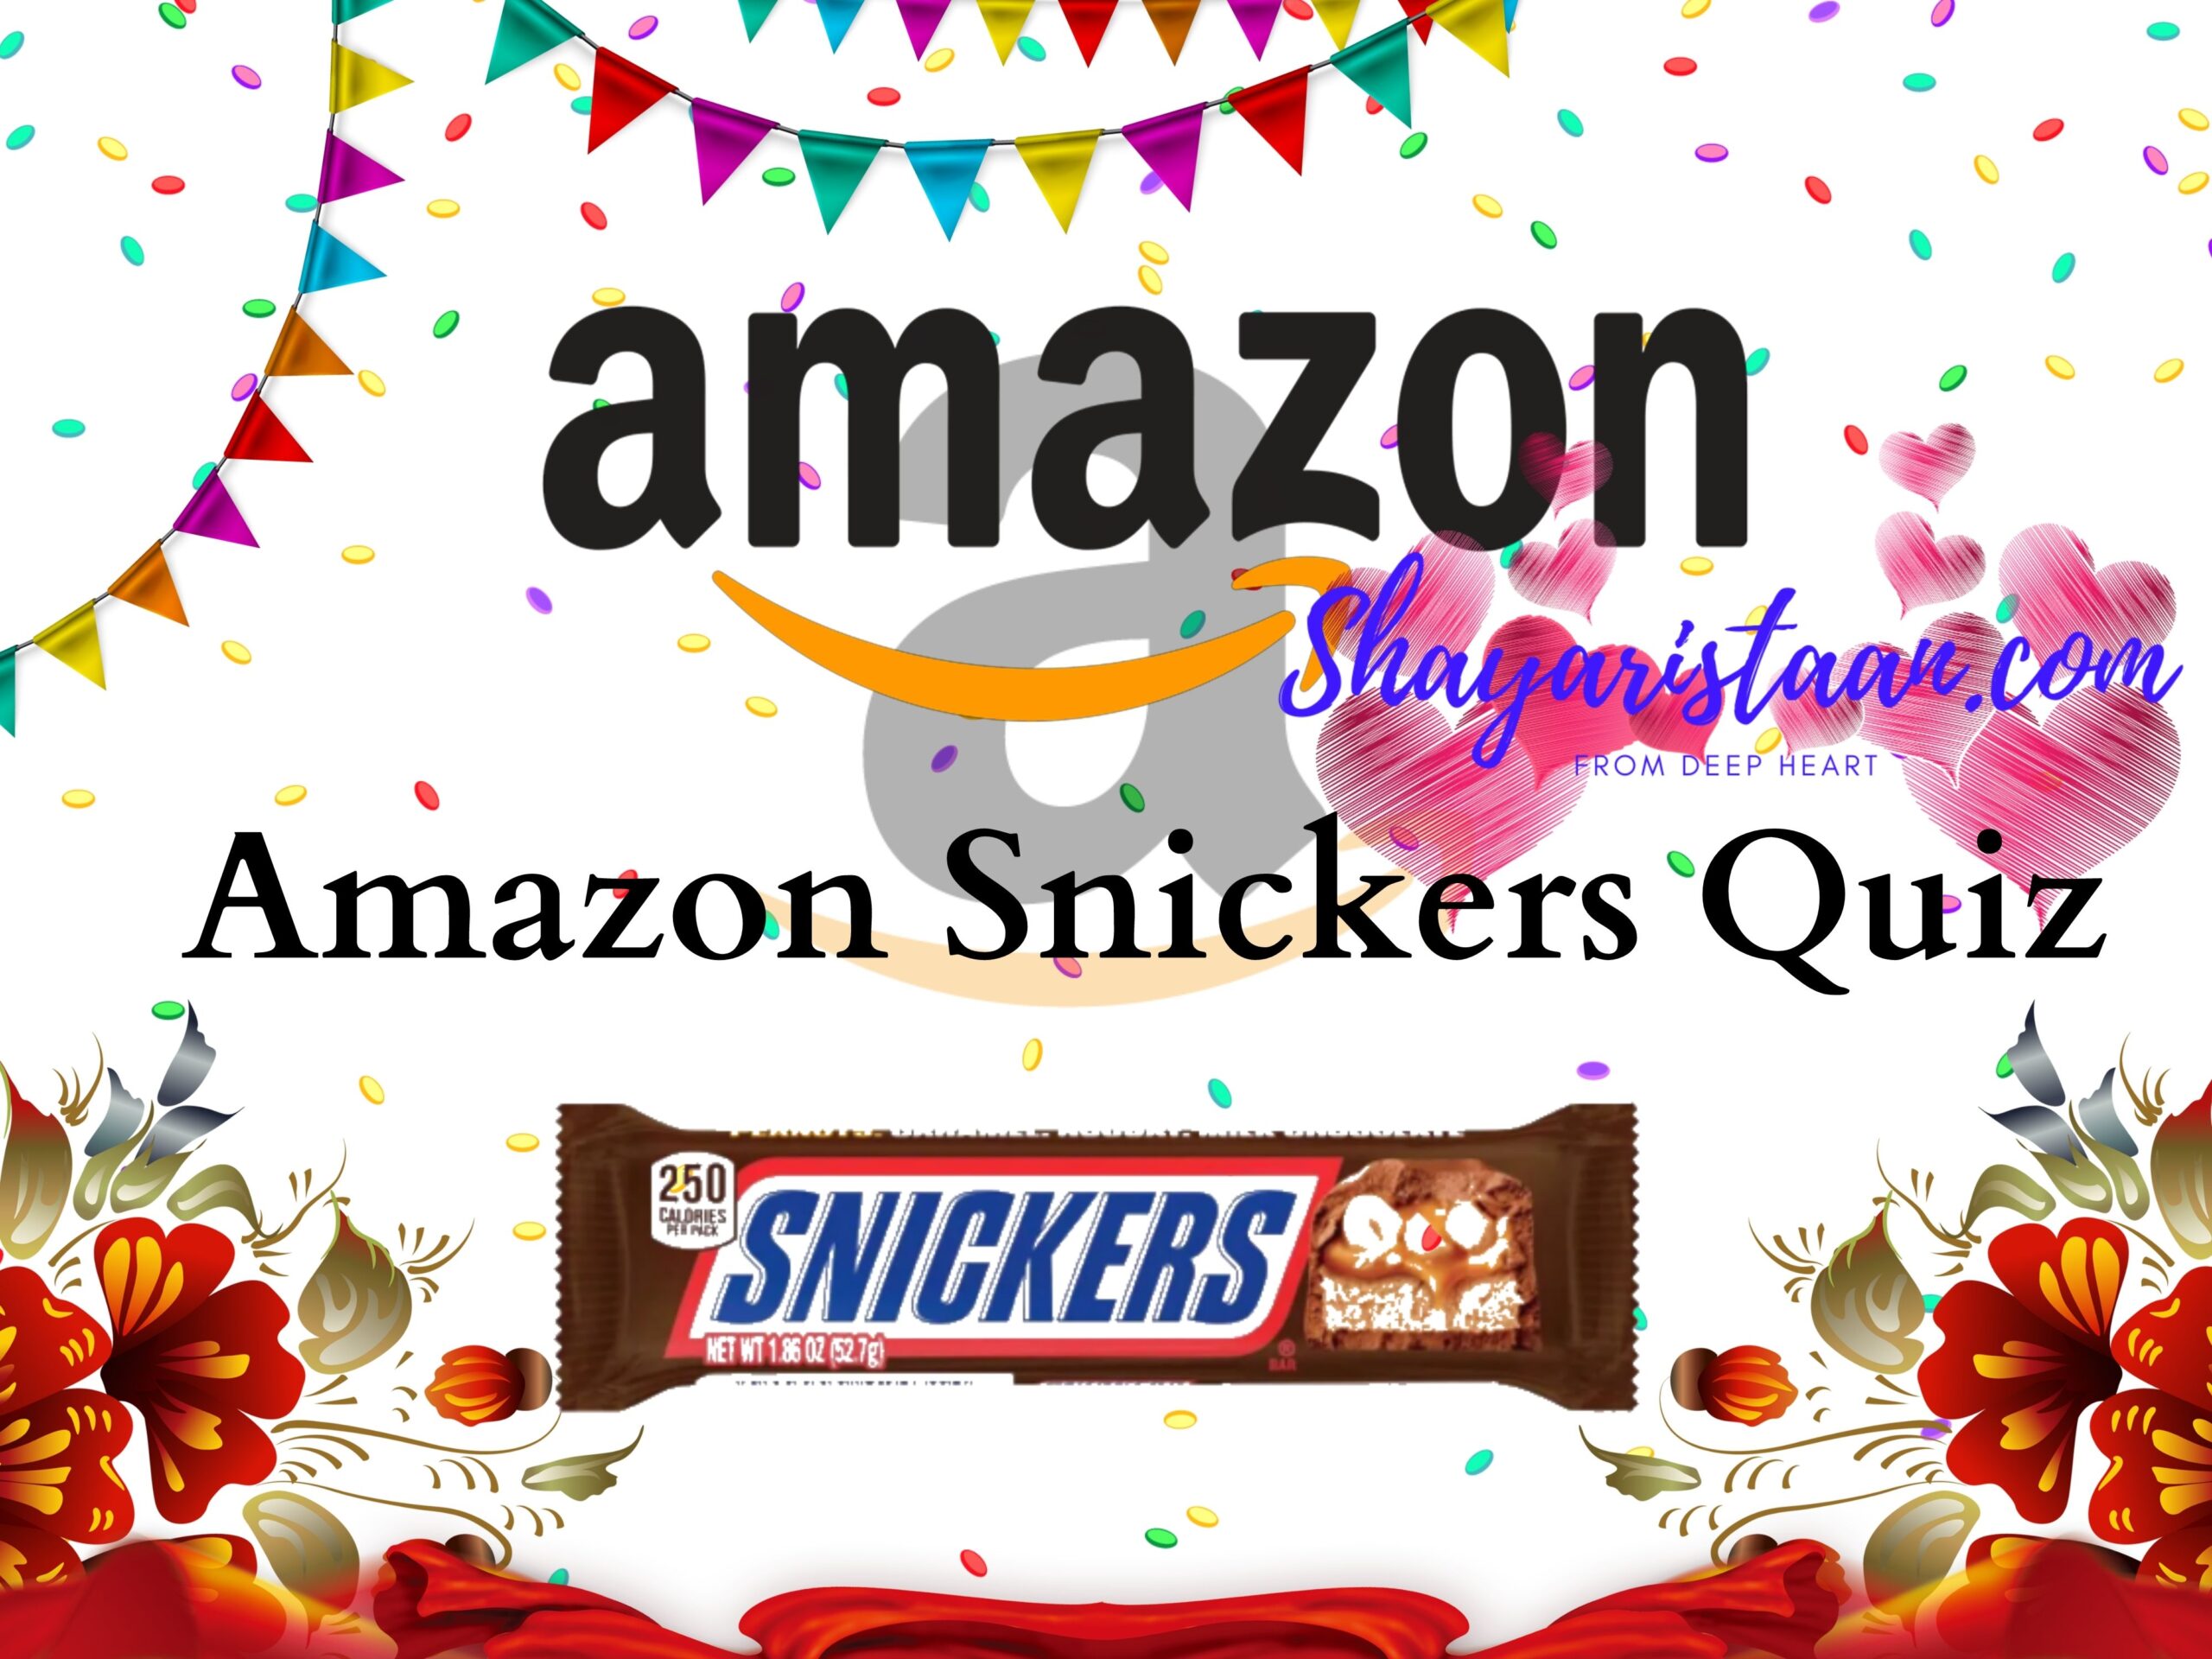 Amazon Snickers Quiz Answer